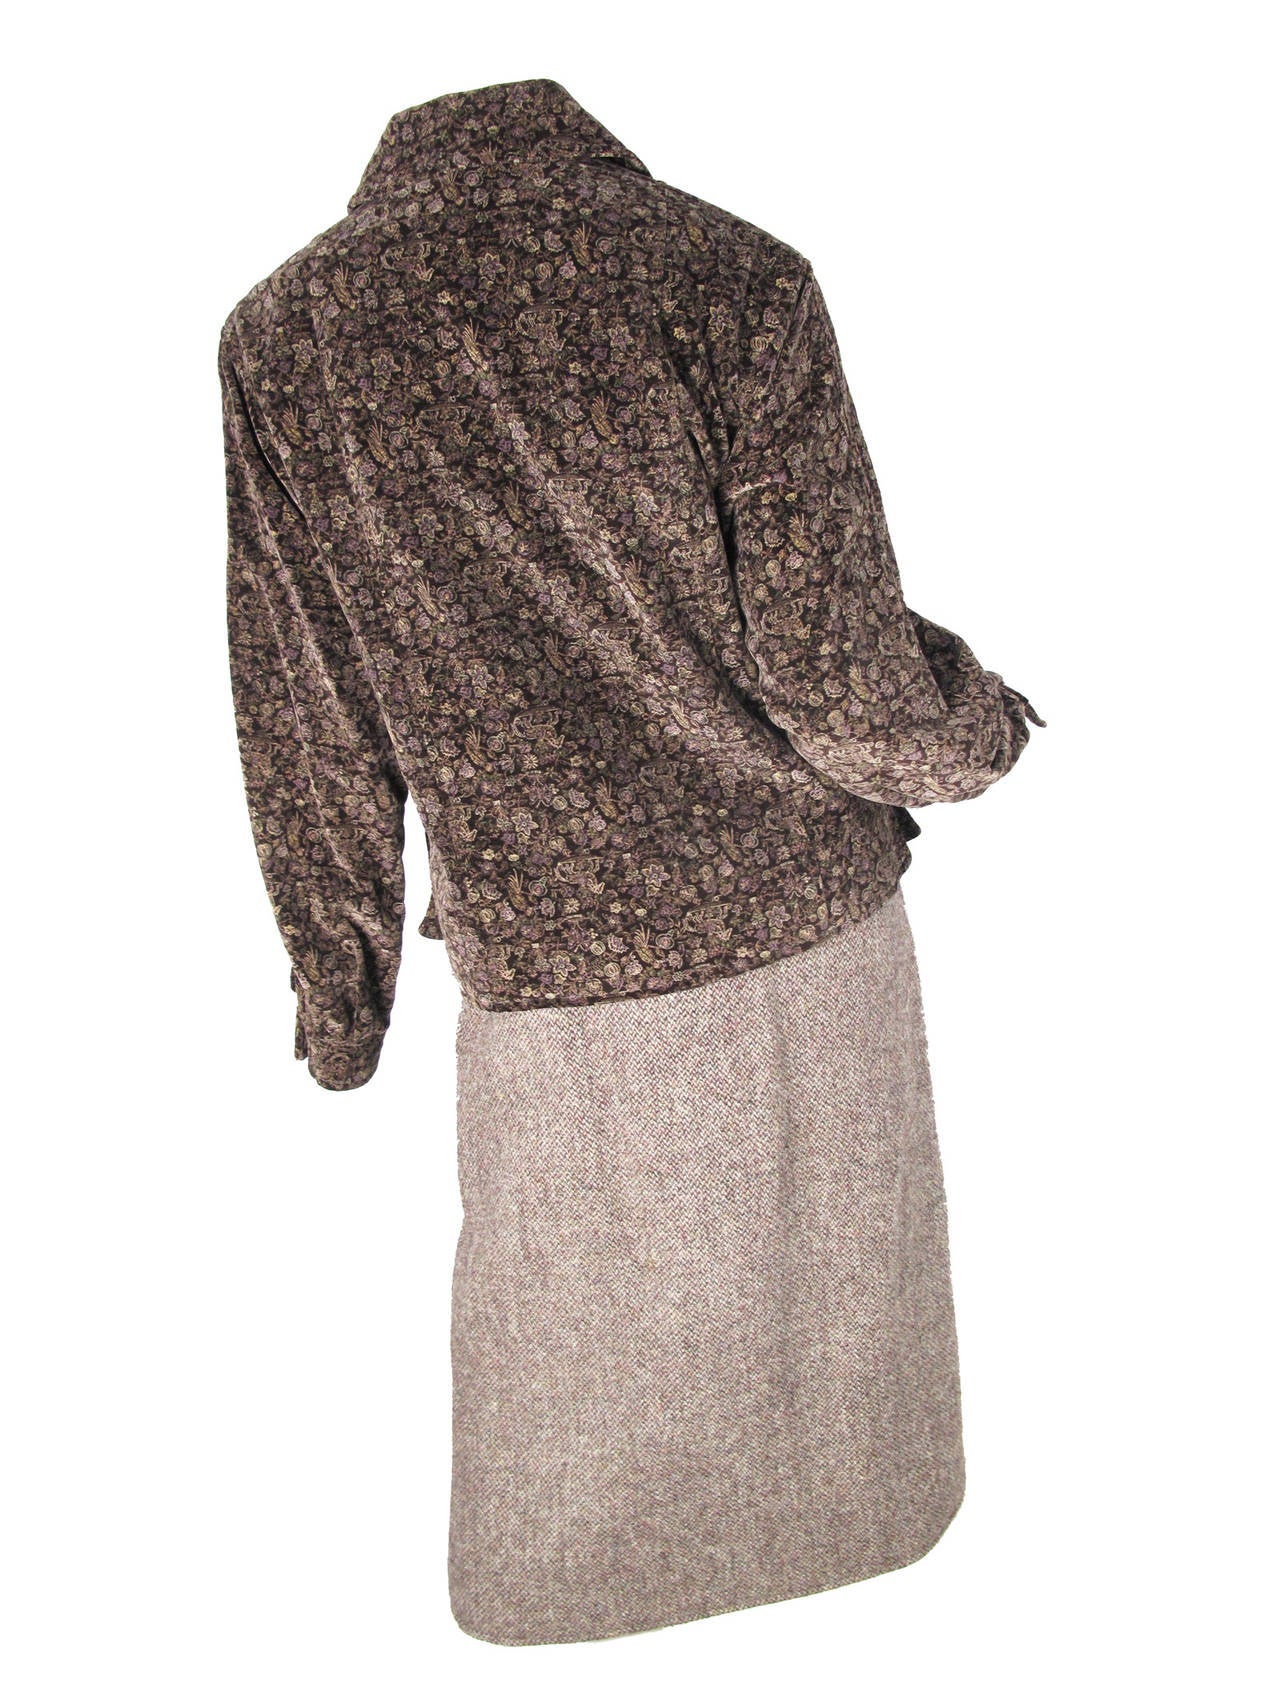 1970s Oscar de la Renta floral printed jacket with wool skirt.  Condition: Excellent. 
Jacket: 38